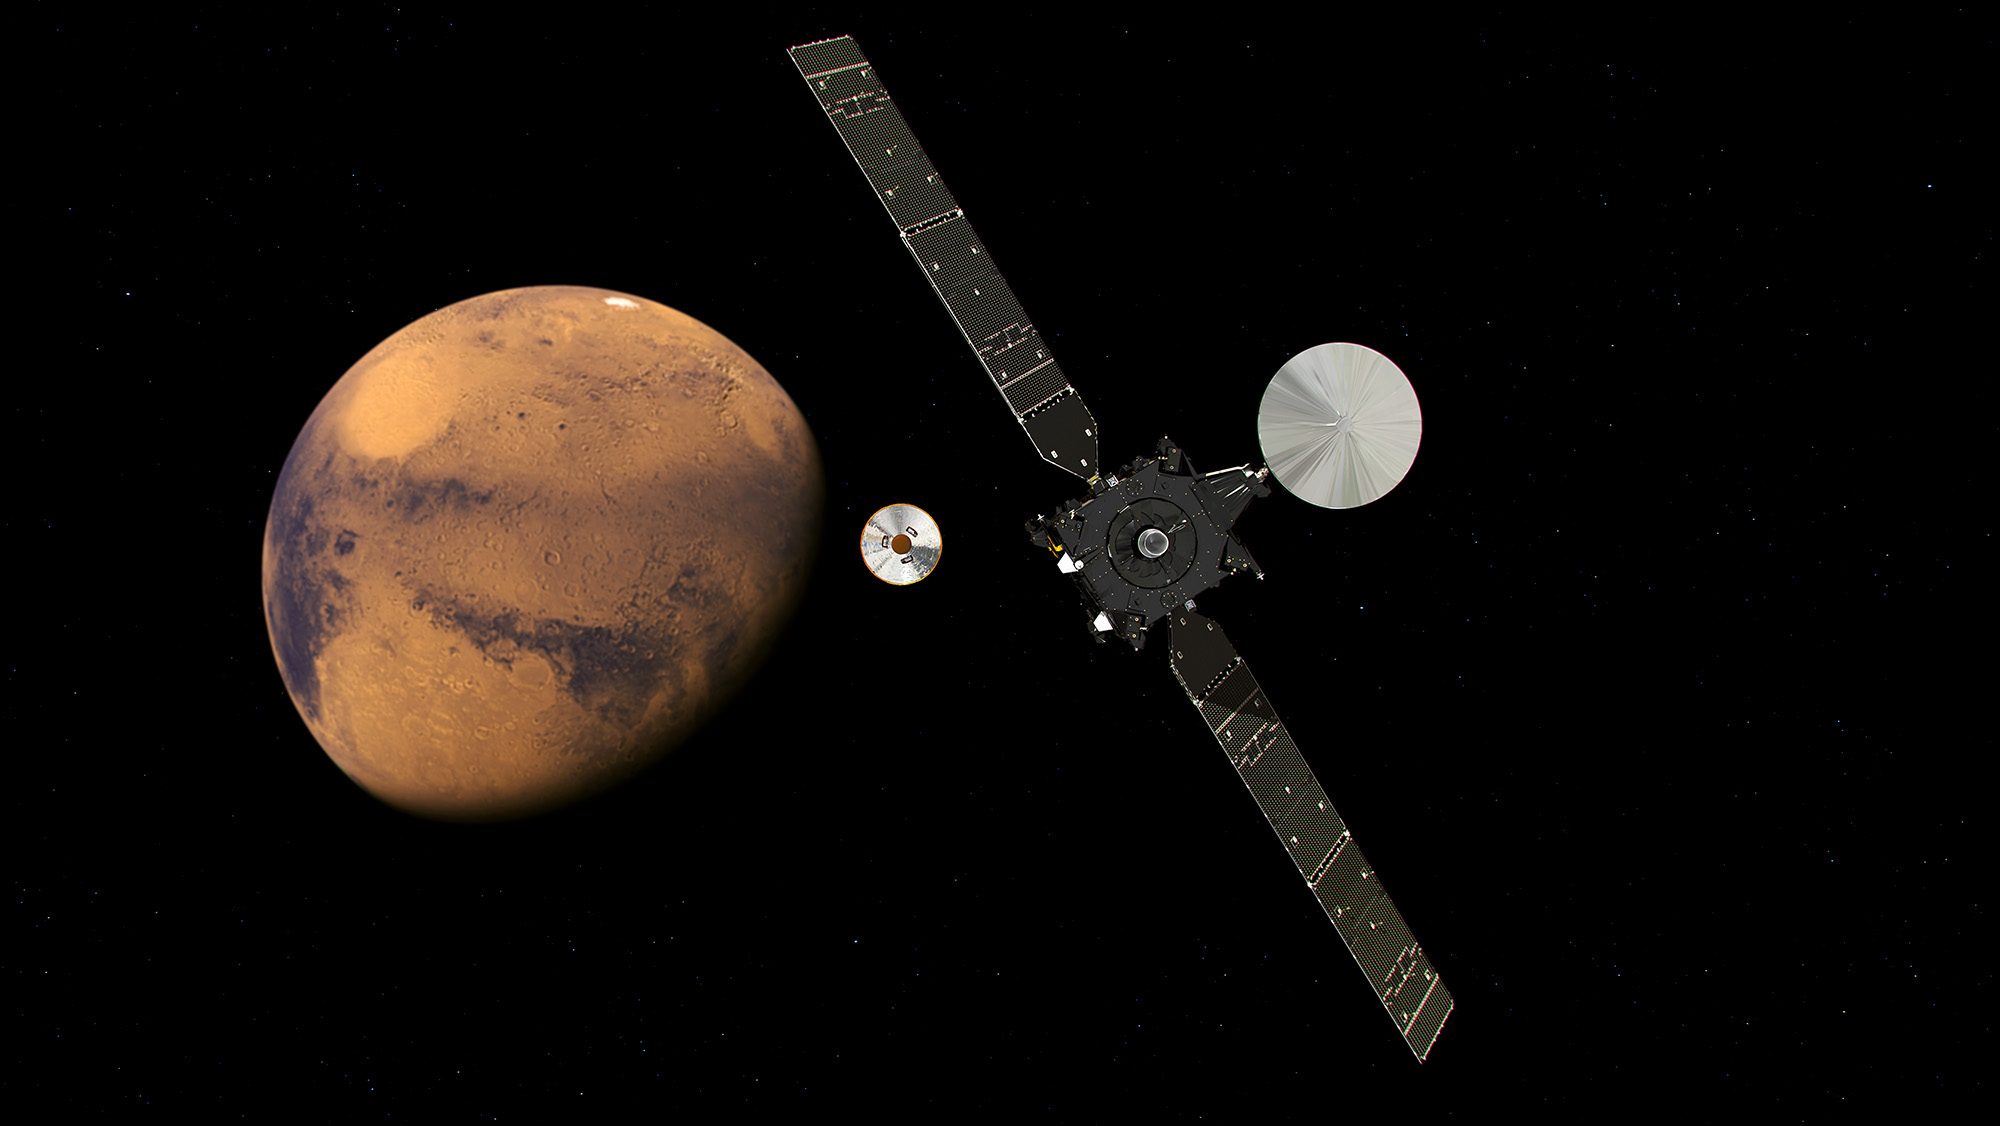 Europe’s Mars lander on track towards red planet